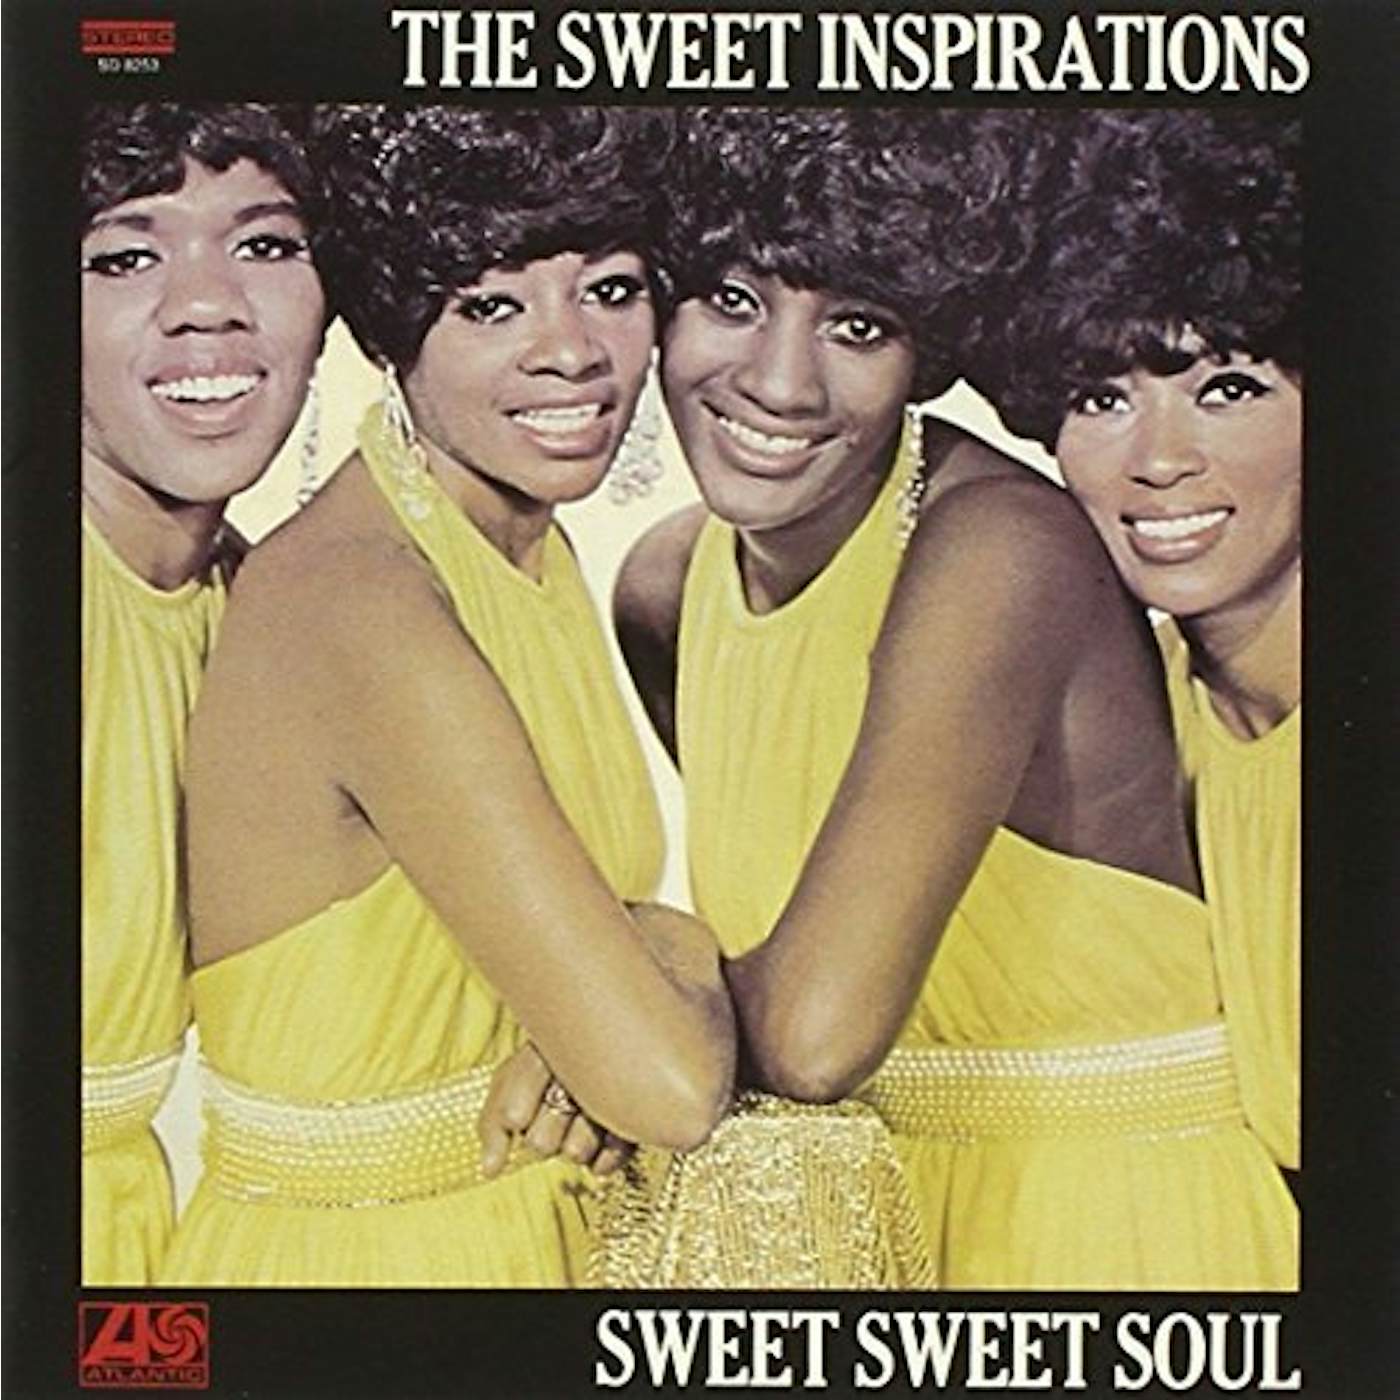 The Sweet Inspirations SWEET SWEET SOUL CD